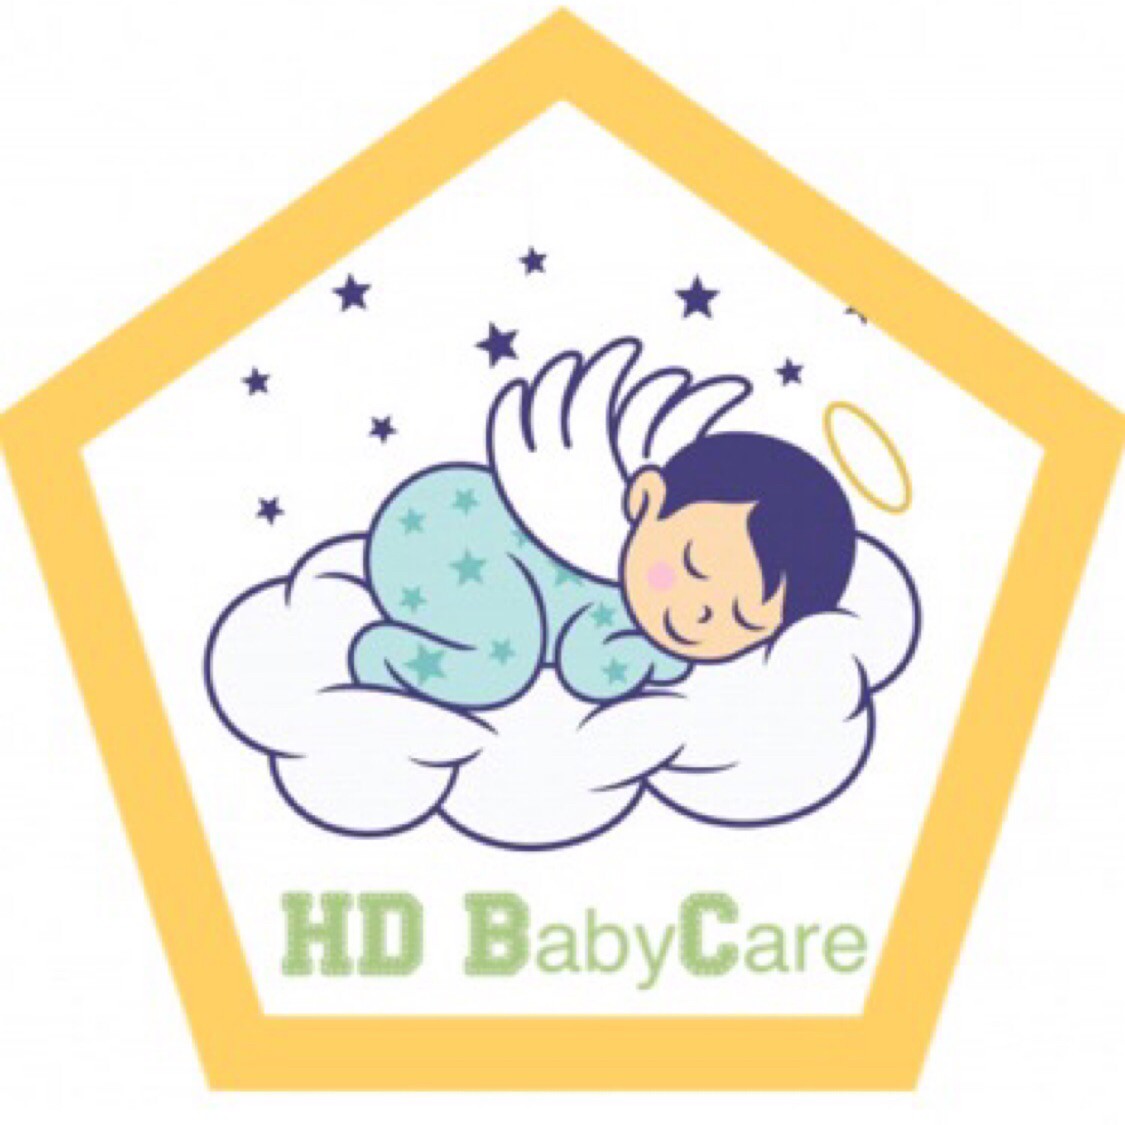 HD BabyCare